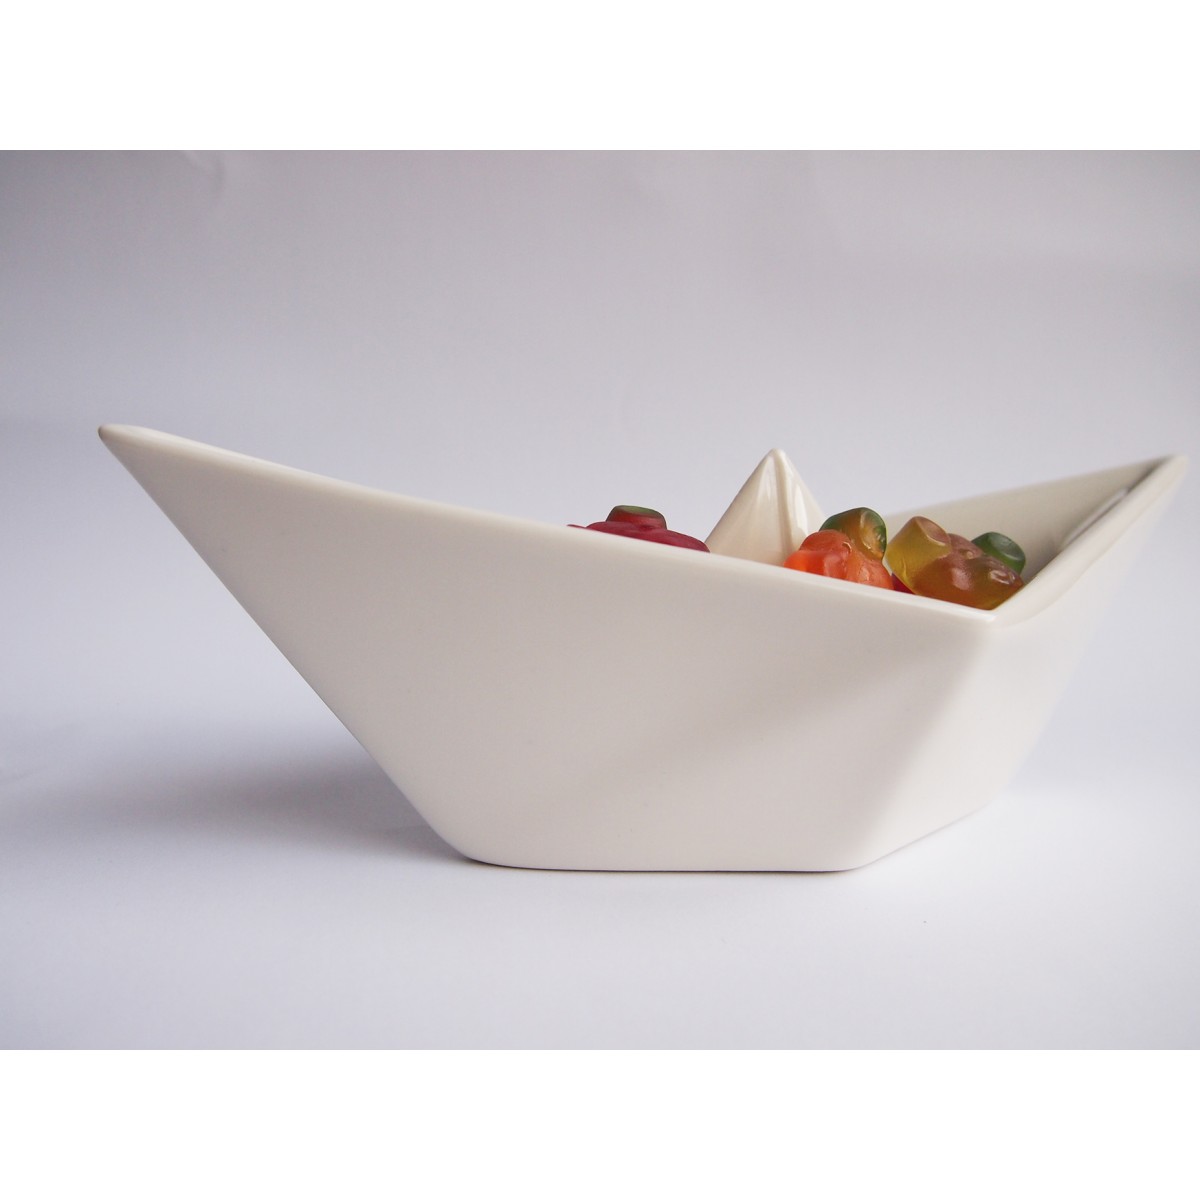 moij design Origami Schiffchen Schale 'bootje'